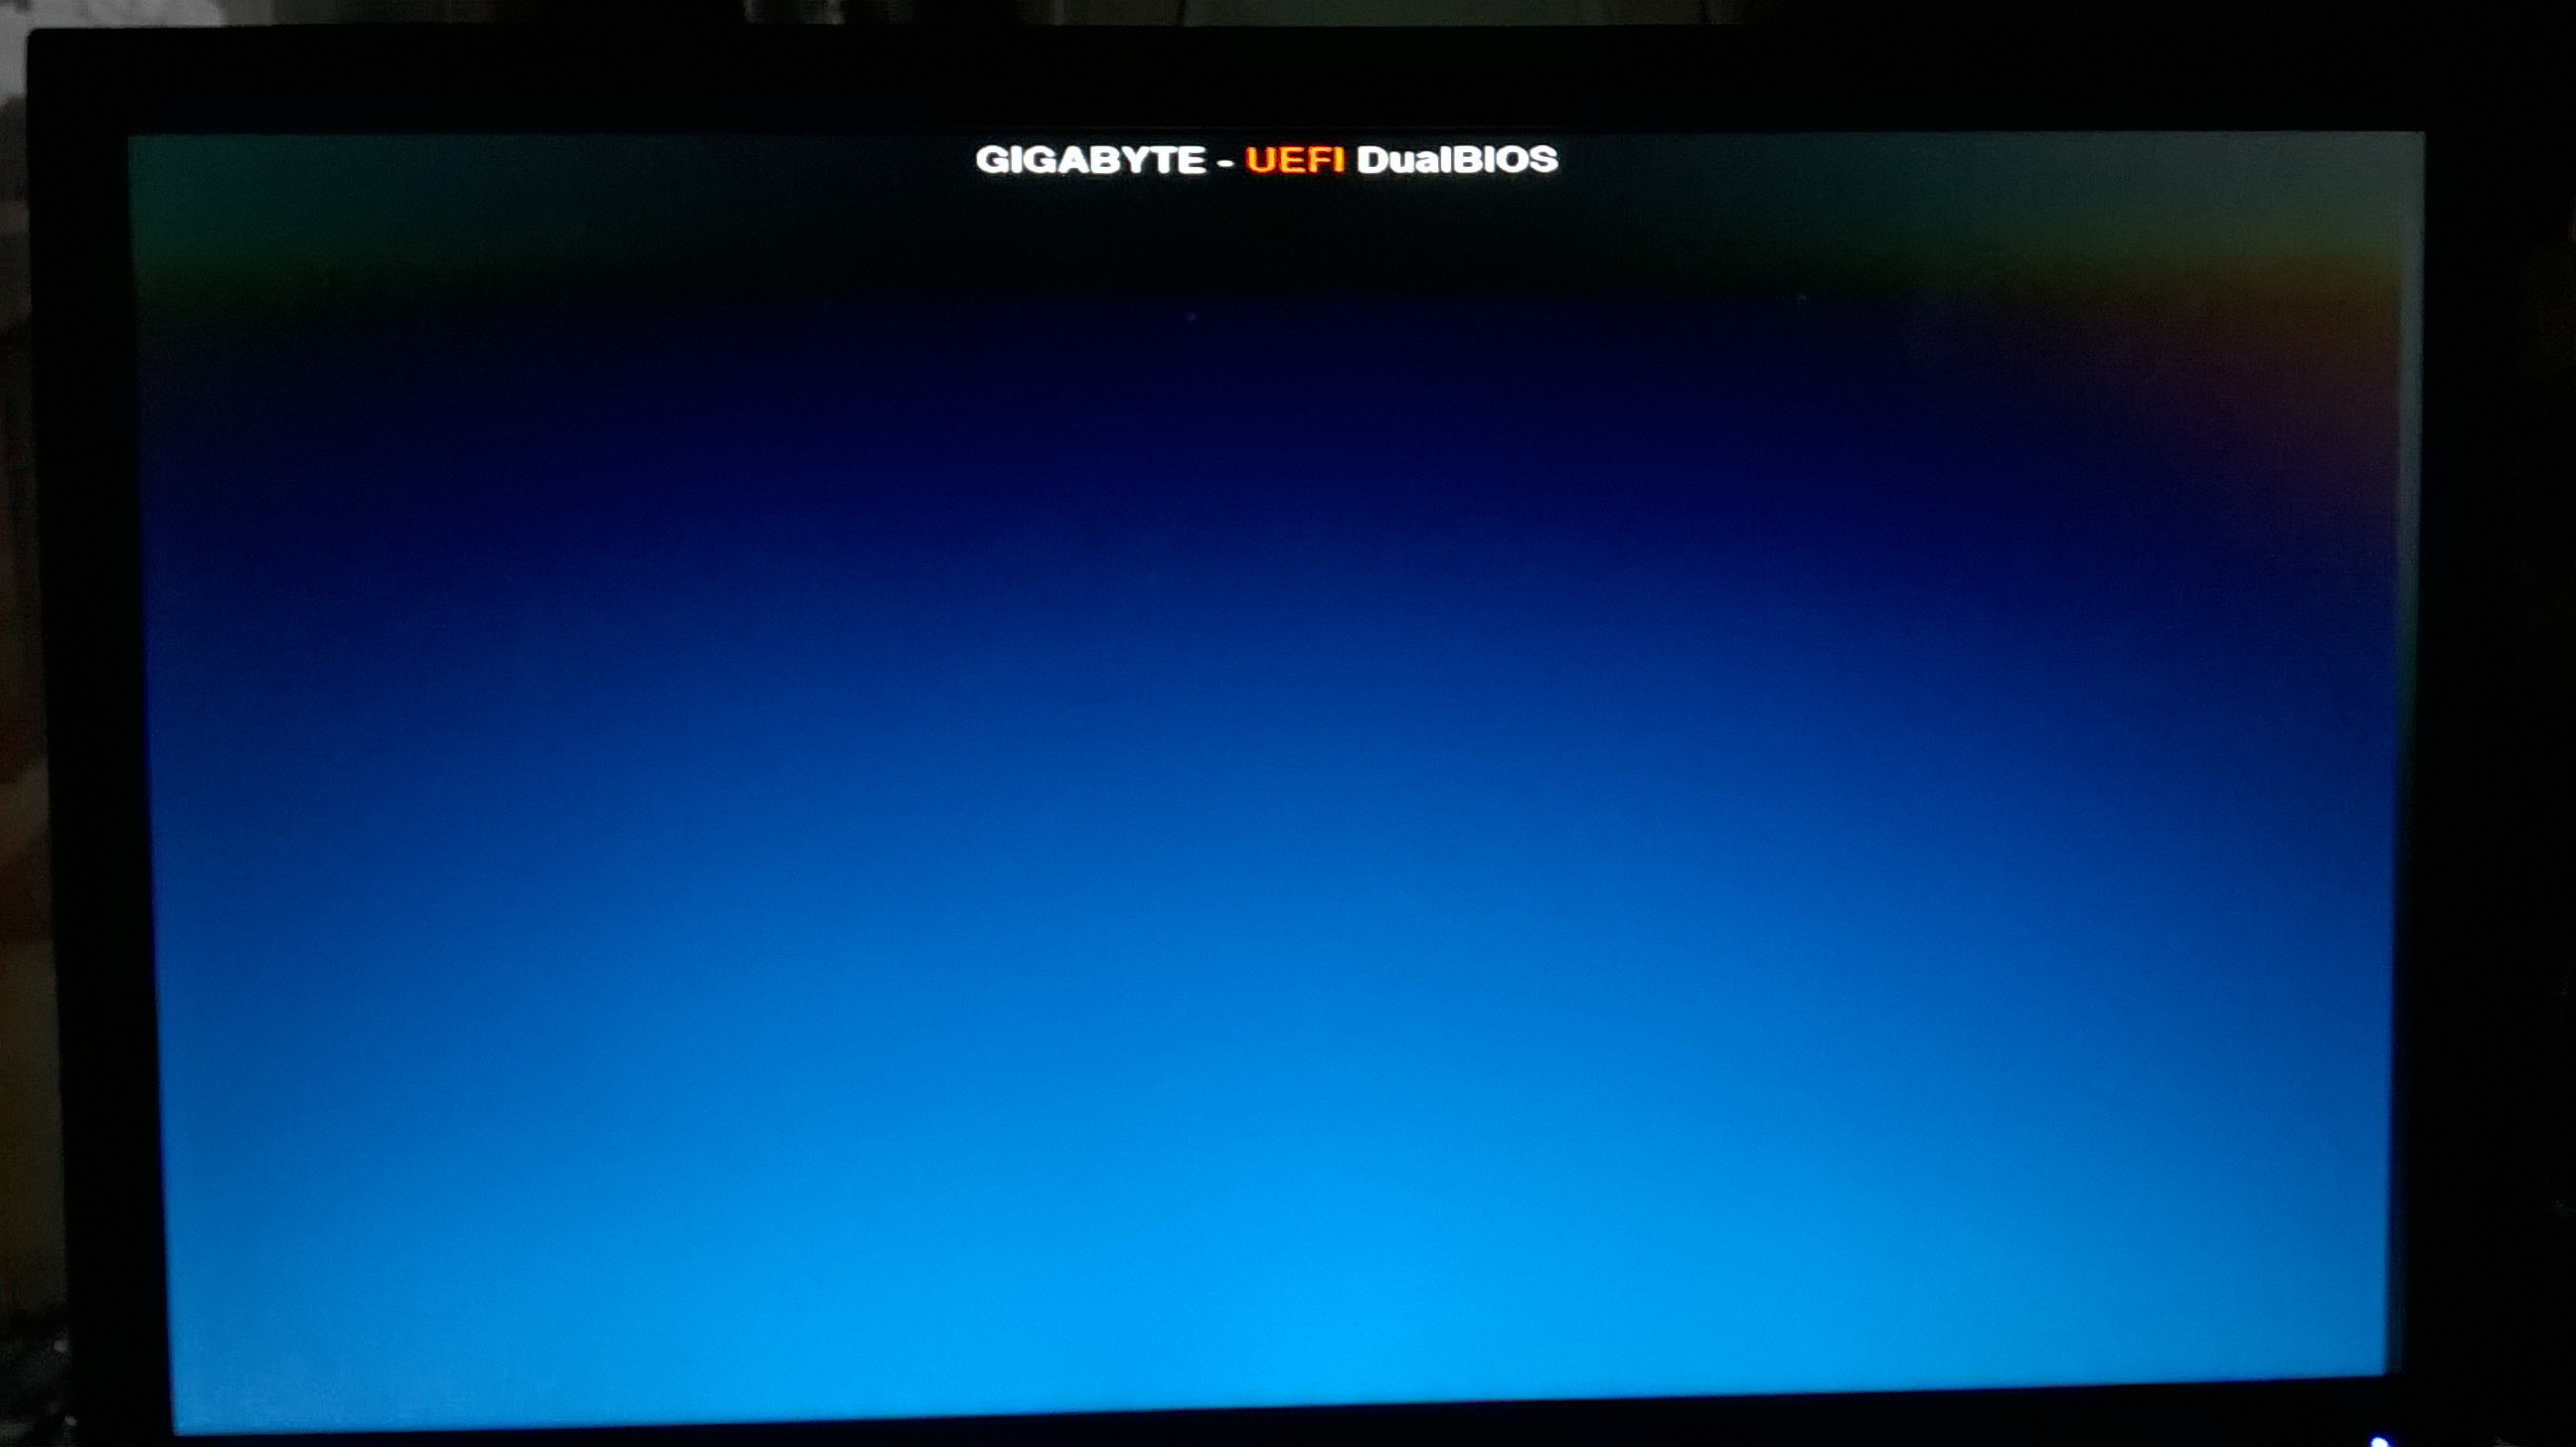 gigabyte motherboards blue screen